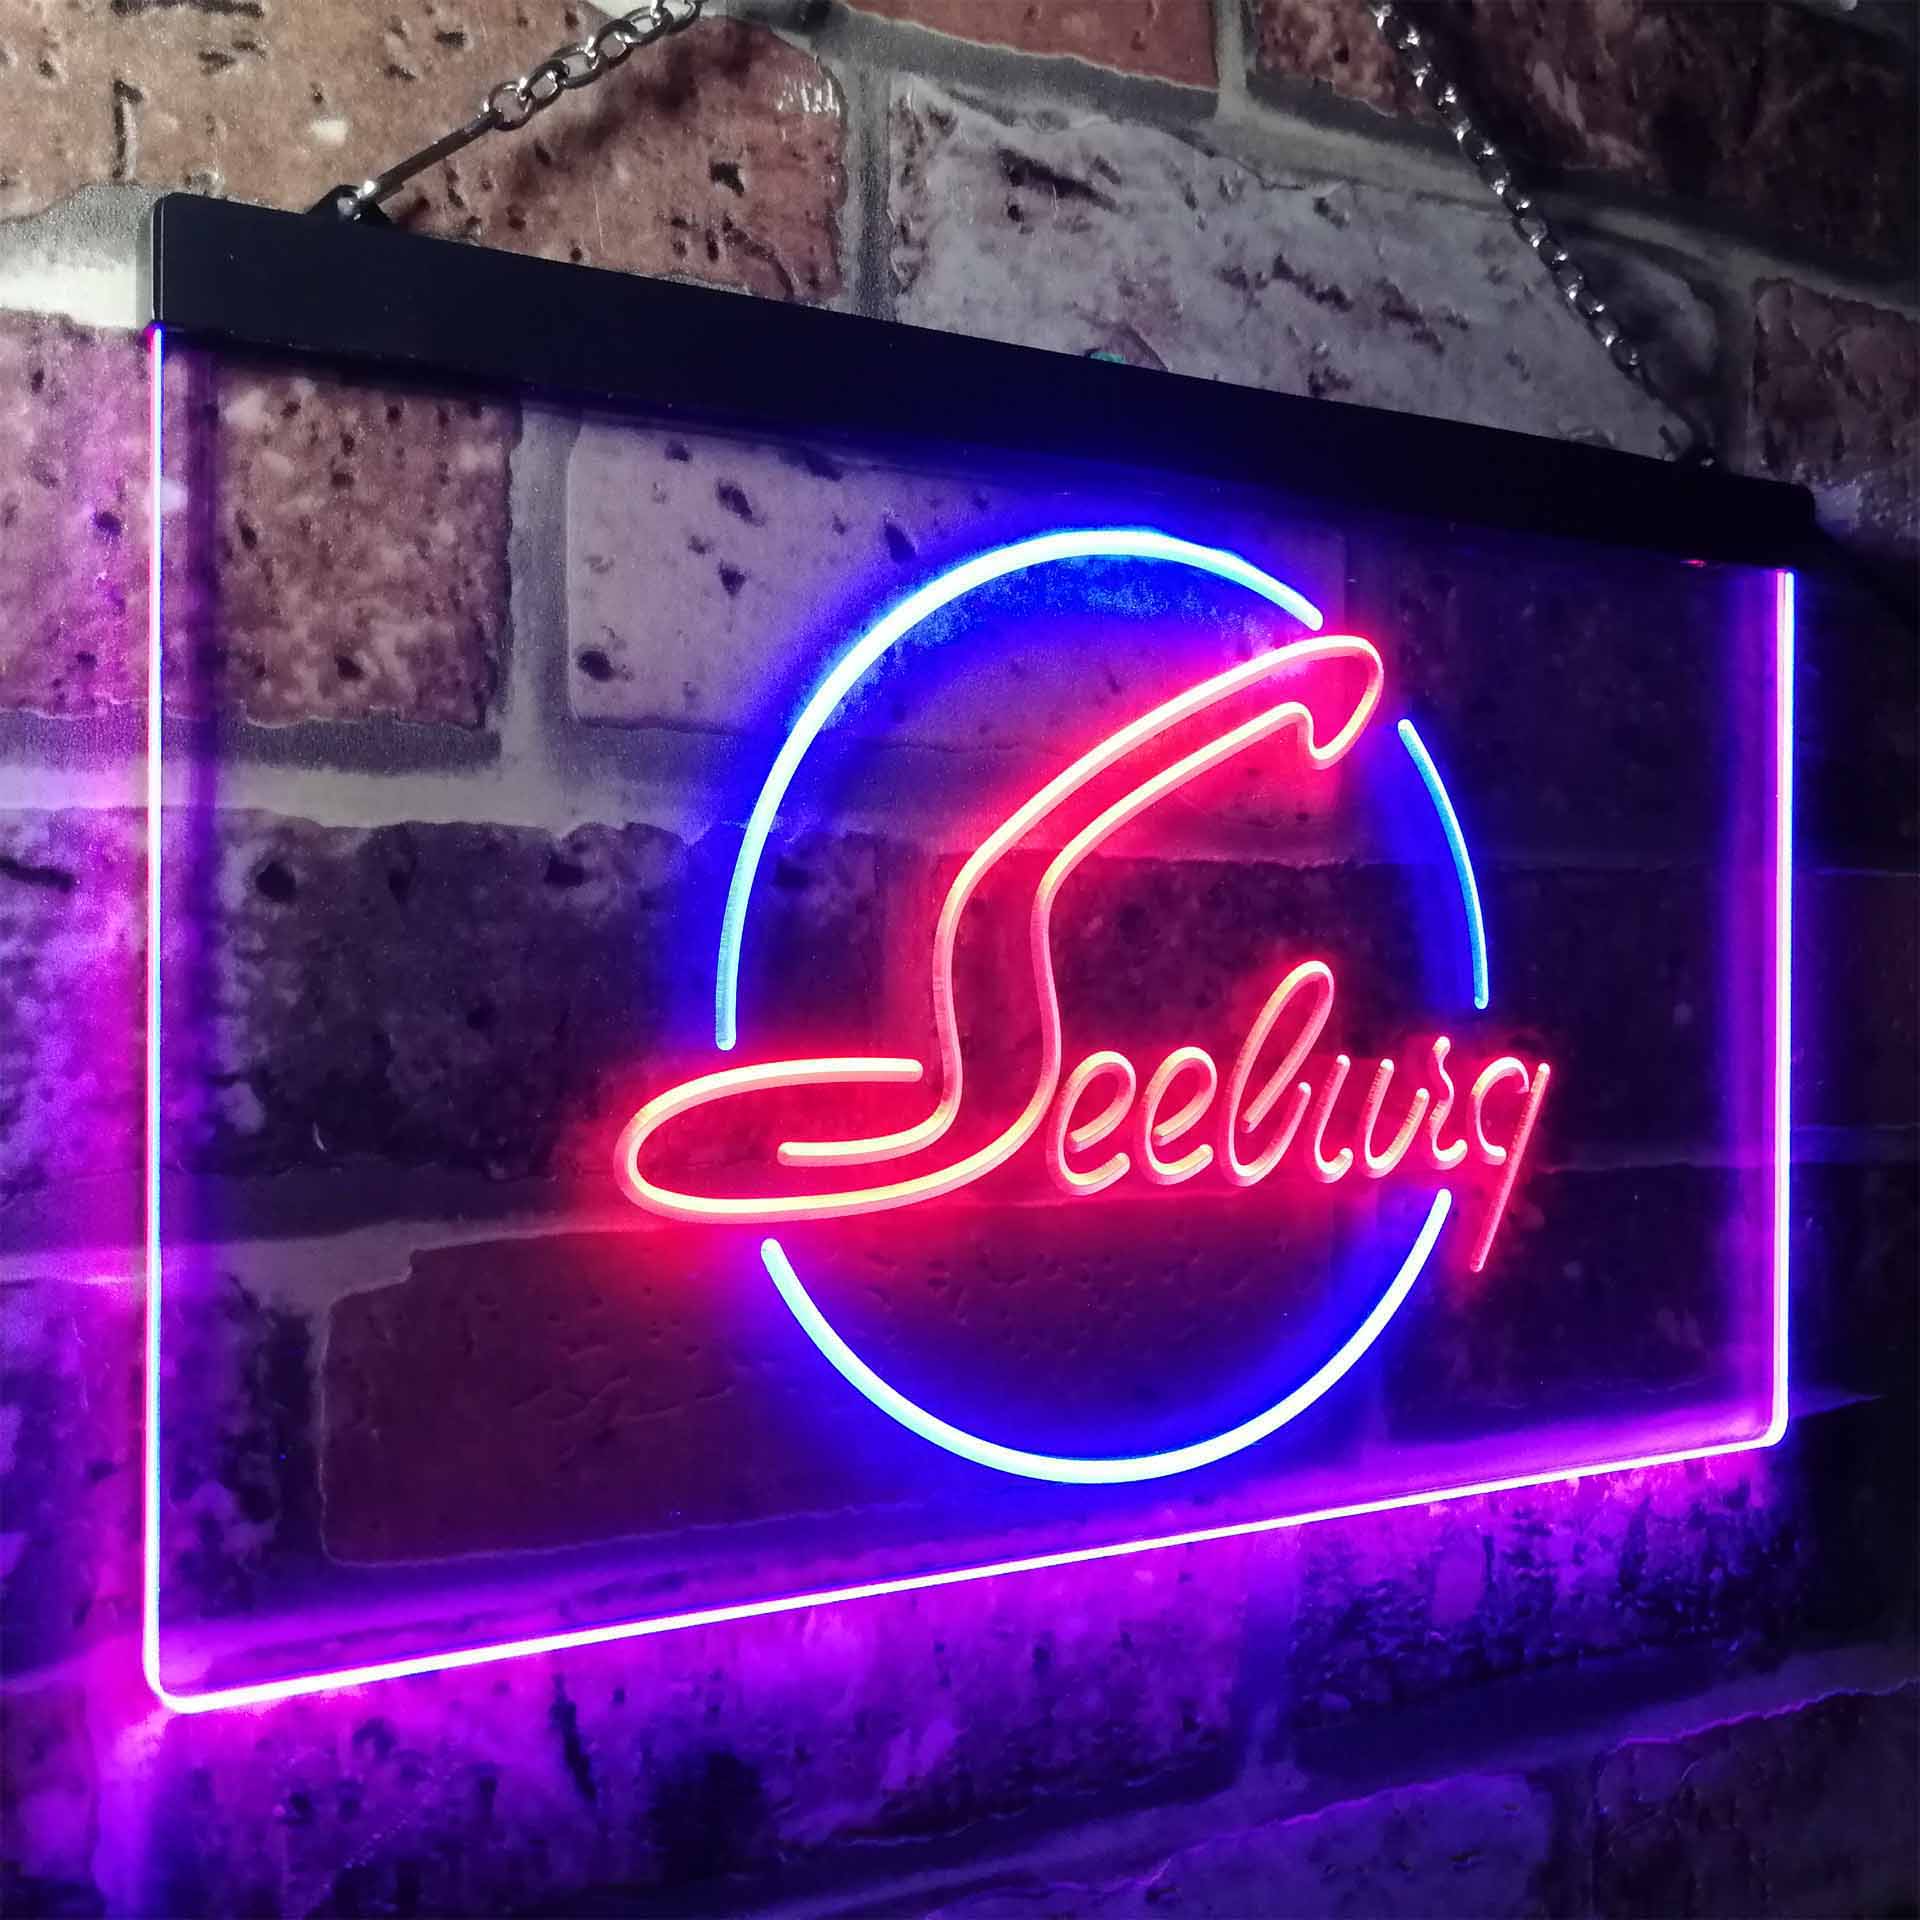 Seeburg Neon Sign - LED LAB CAVE